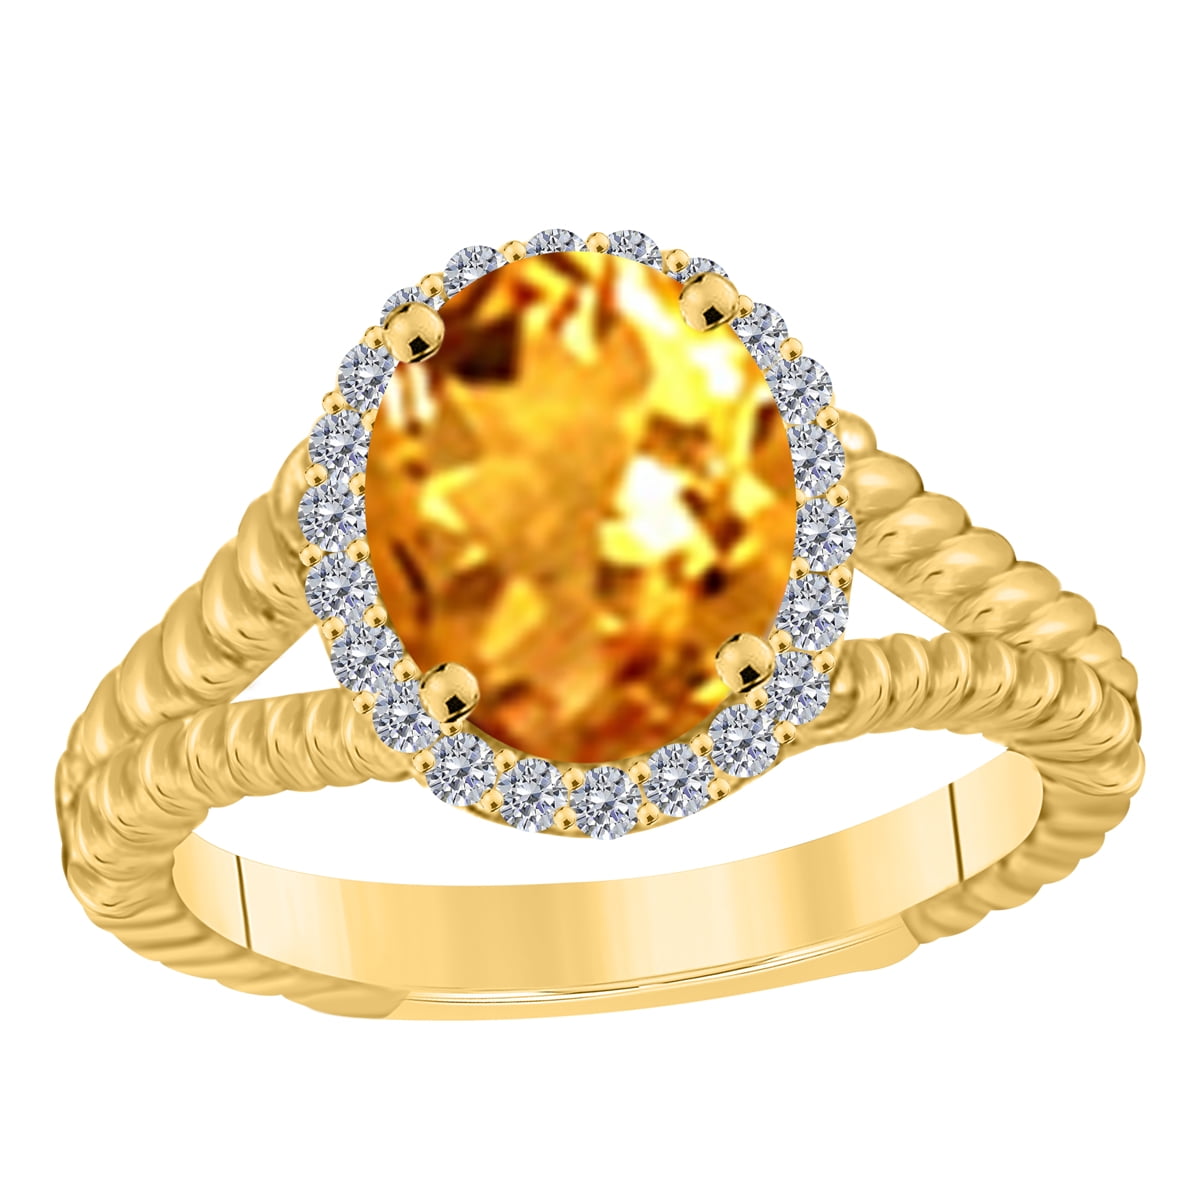 2Ct Oval Orange Citrine Diamond Halo Ring Women Jewelry 14K White Gold Plated